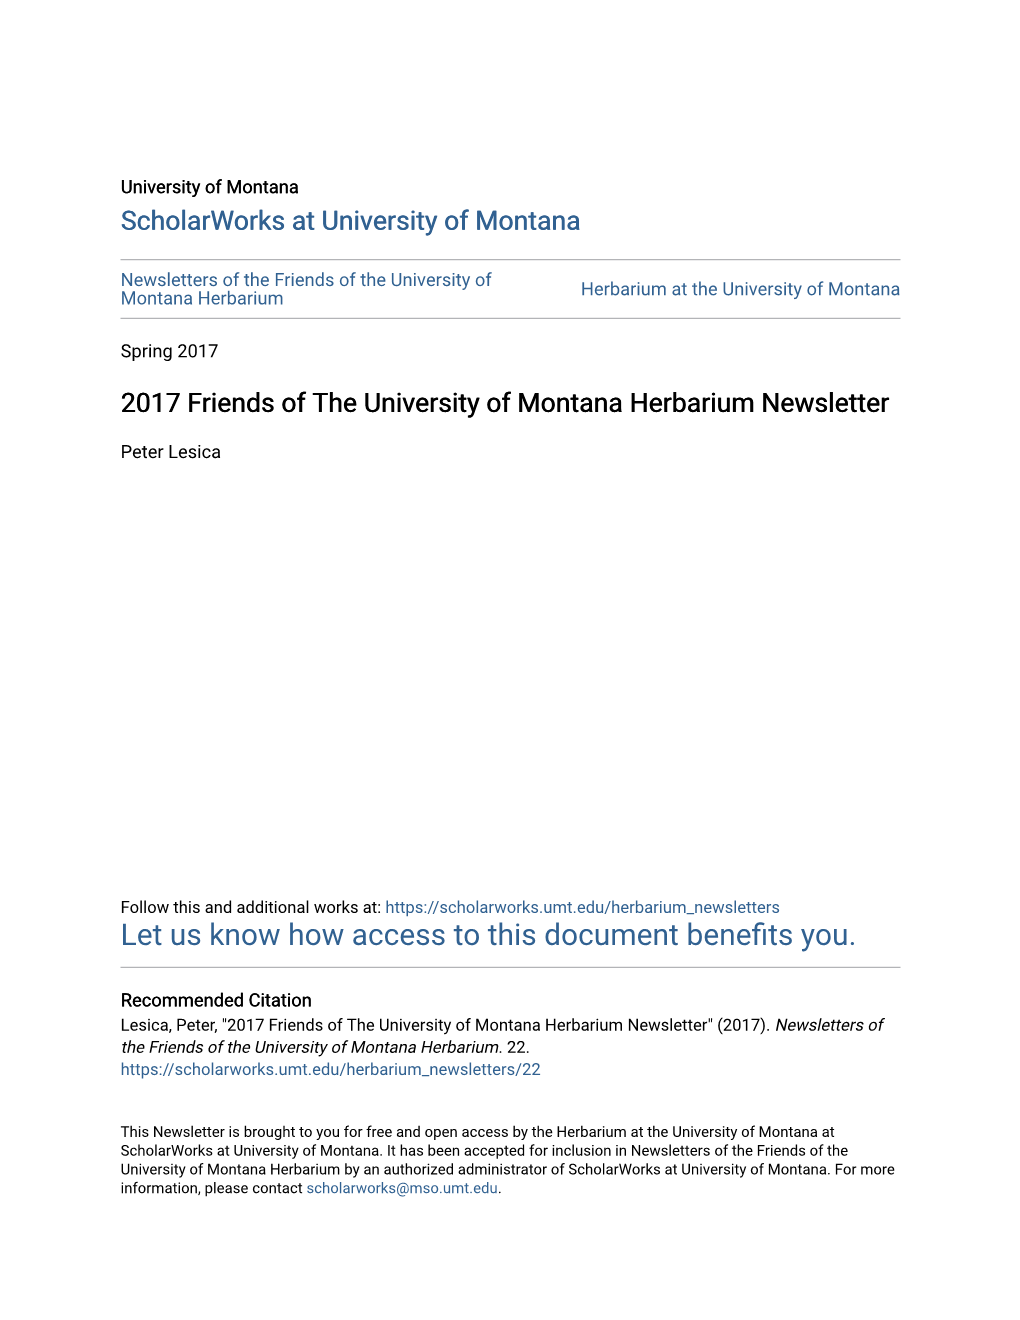 2017 Friends of the University of Montana Herbarium Newsletter